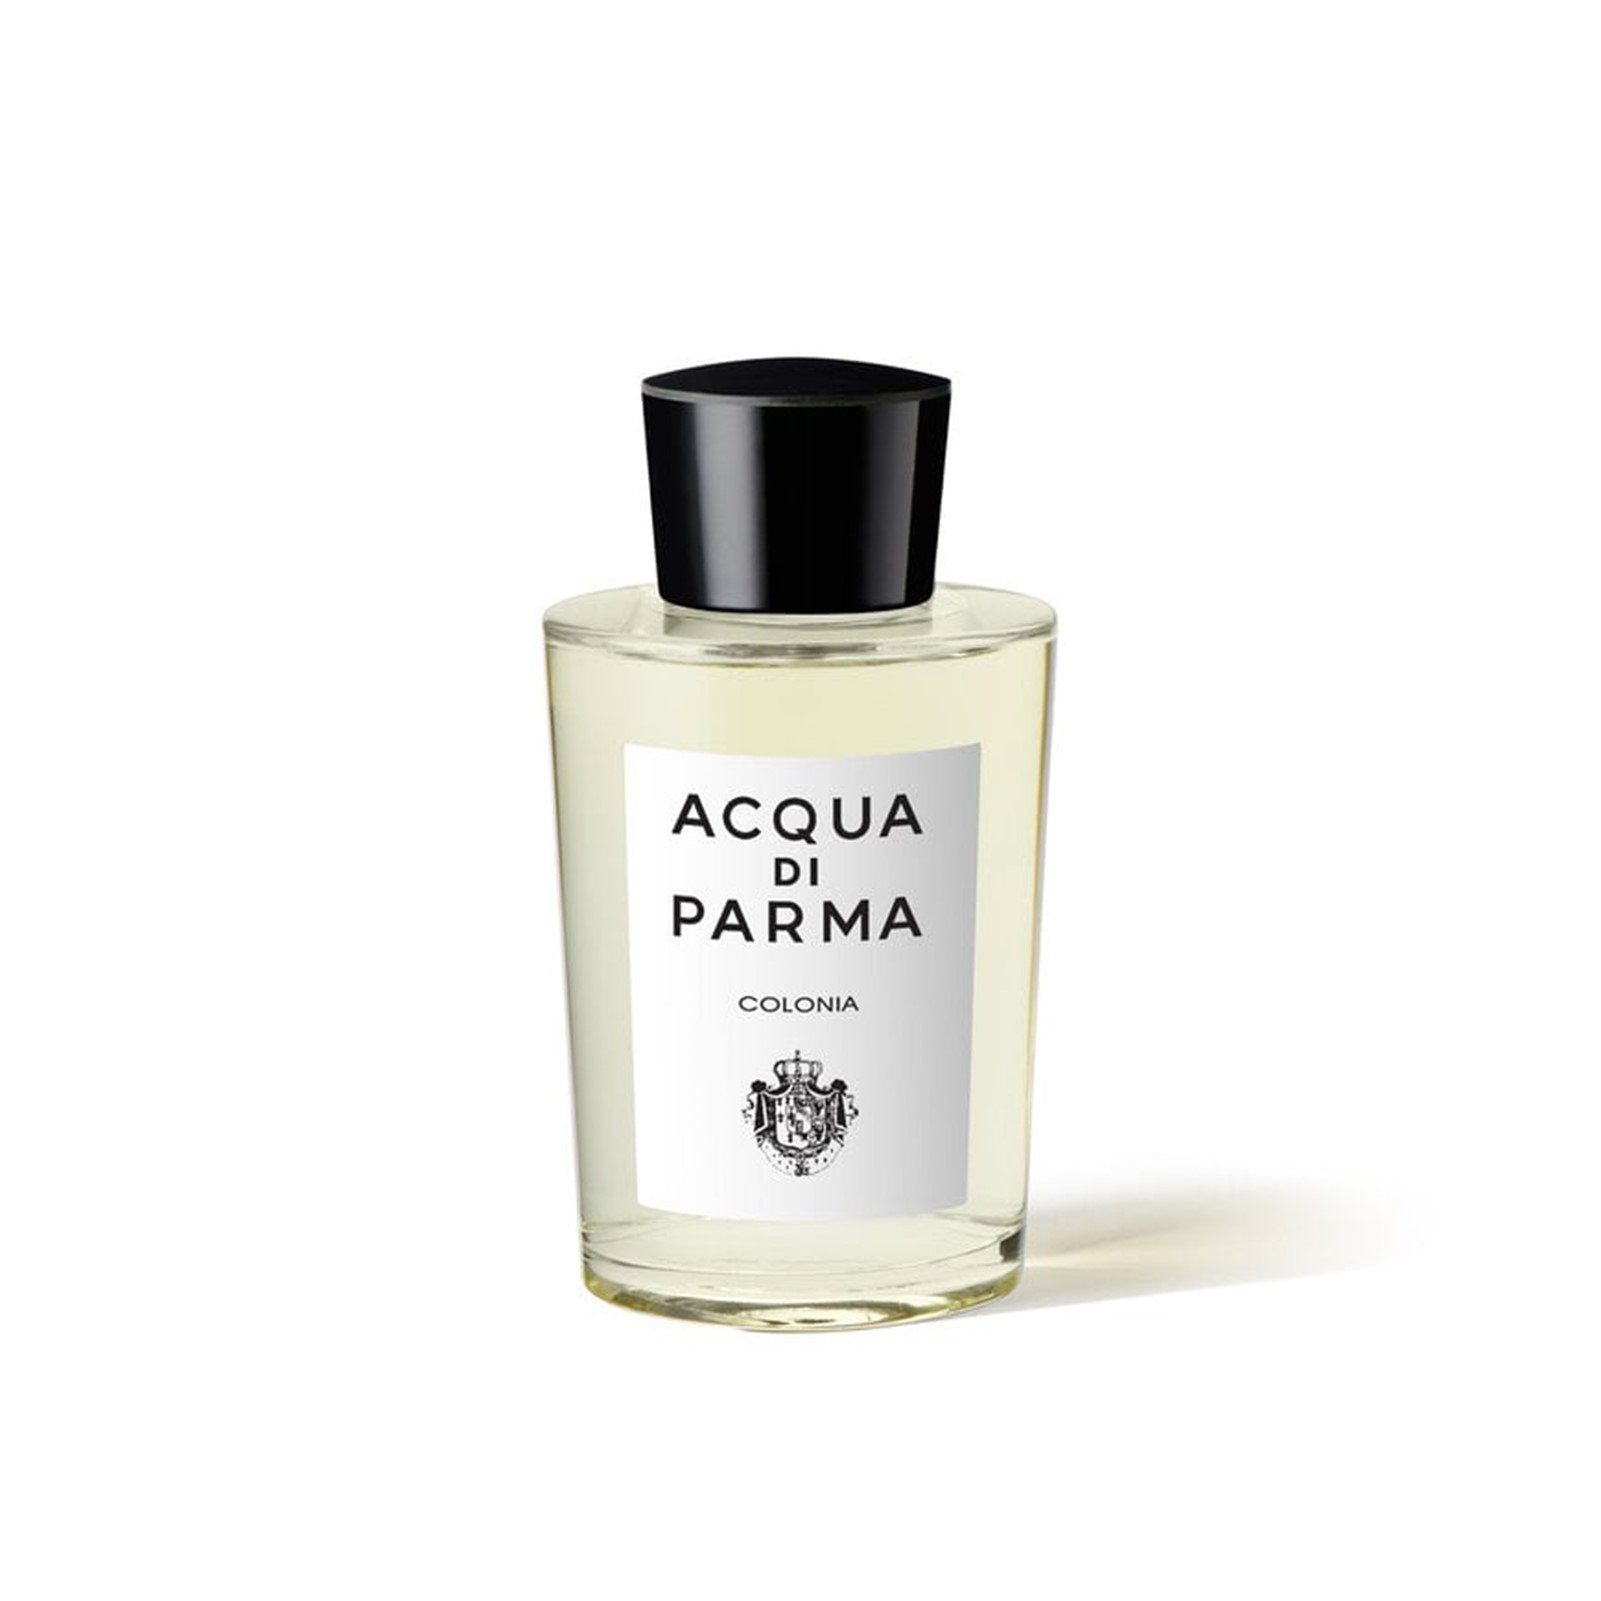 Perfumes Similar to Acqua di Parma Colonia